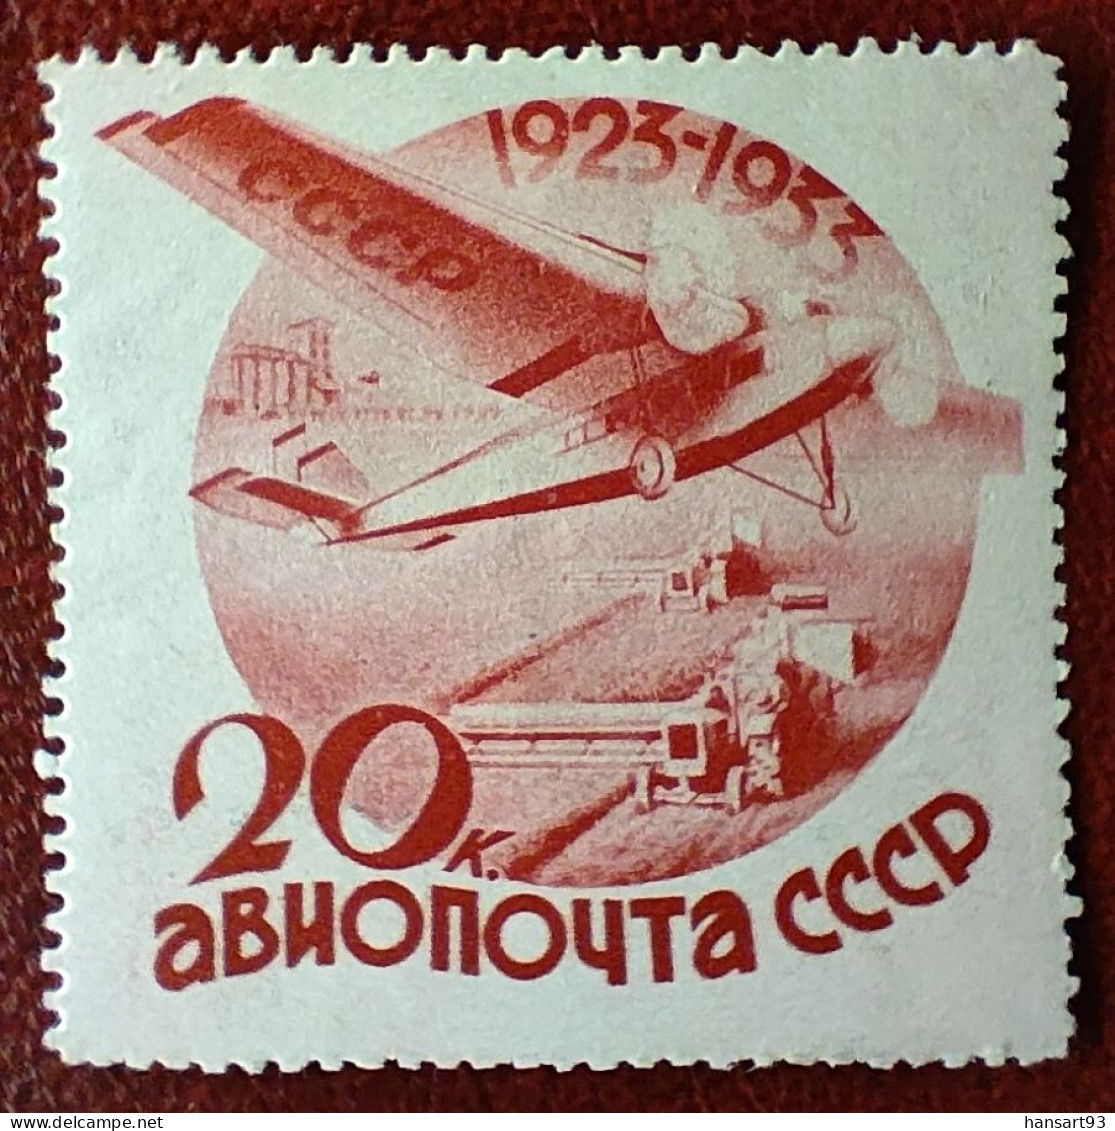 URSS Rare Poste Aérienne N° 43 N* TTB Avec Un Petit Pli Horizontal ! Cote 2020 : 50,00 Euros ! A Voir Absolument !! - Ungebraucht